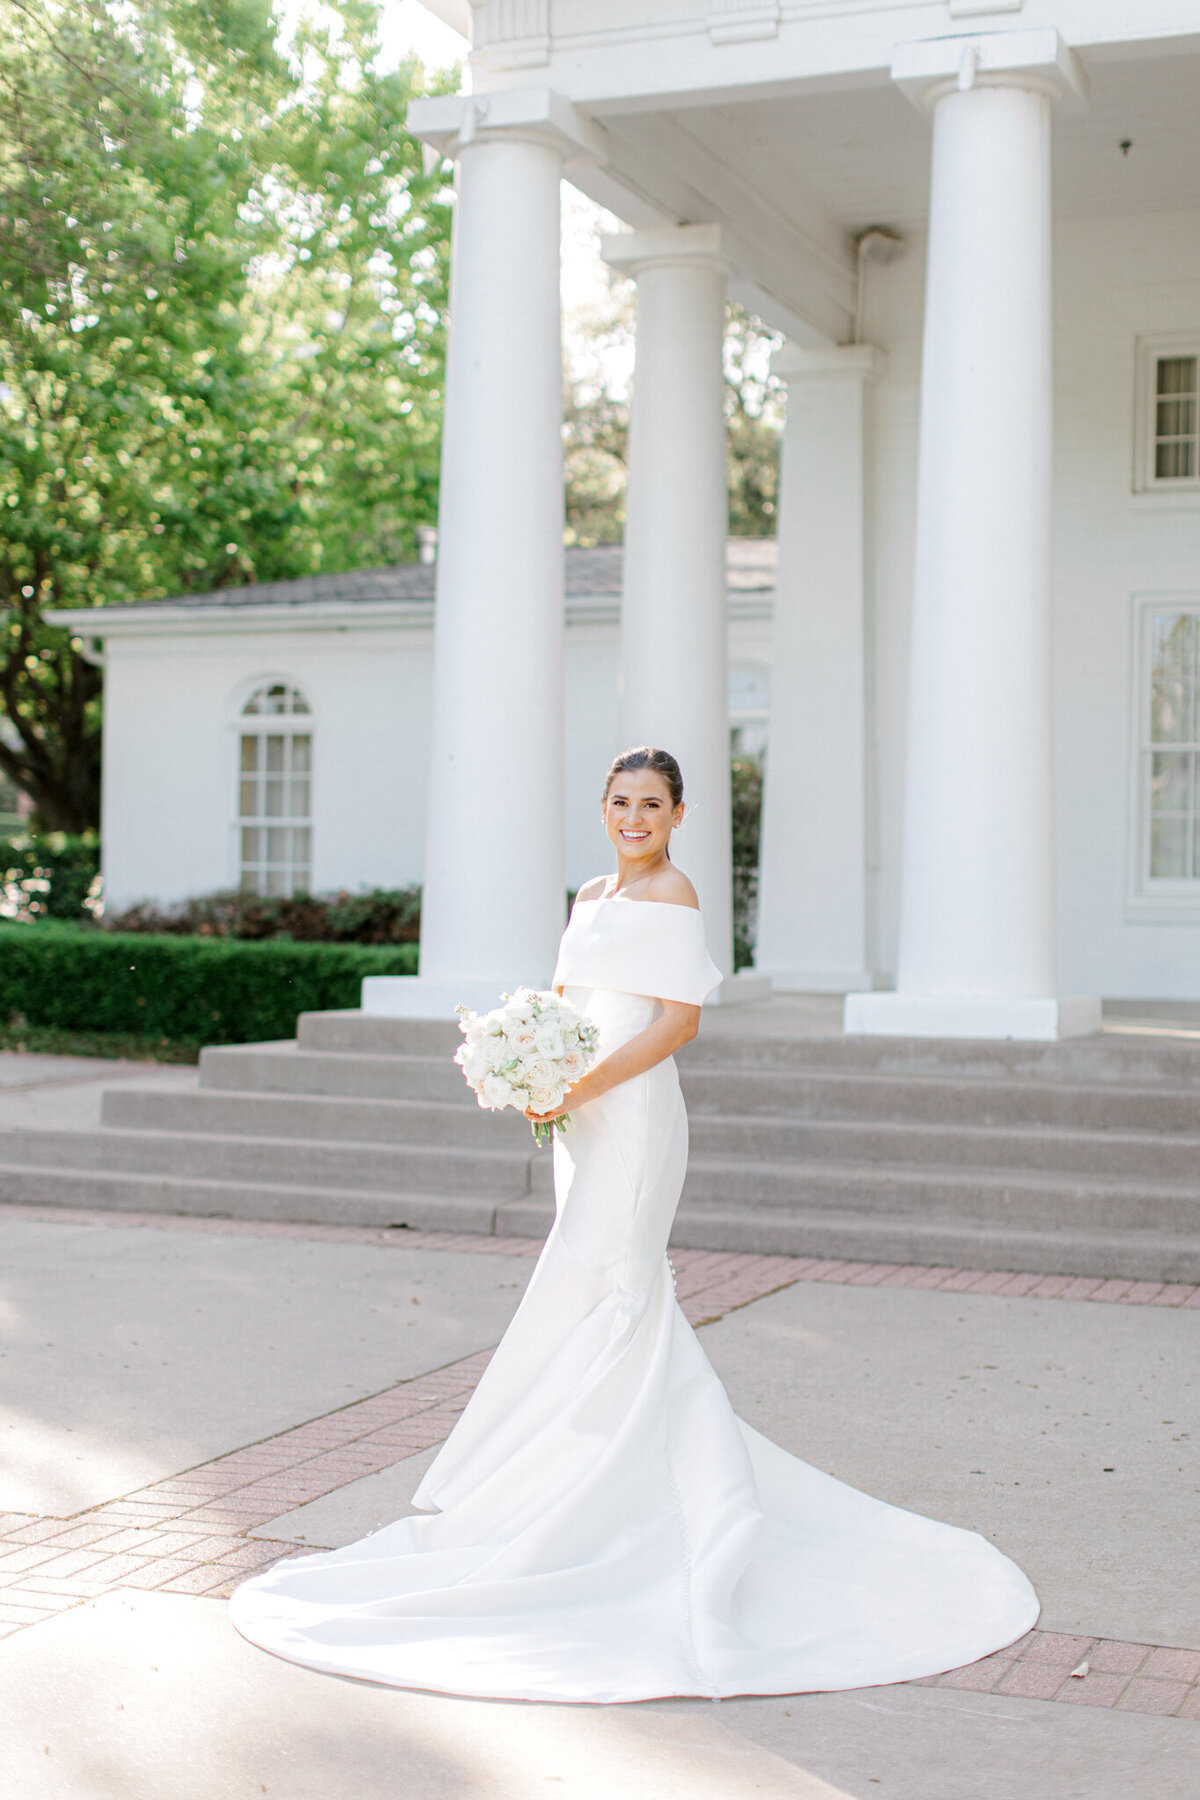 Annie's Bridal Portraits at Arlington Hall Turtle Creek Park | Dallas Wedding Photographer | Sami Kathryn Photography-1